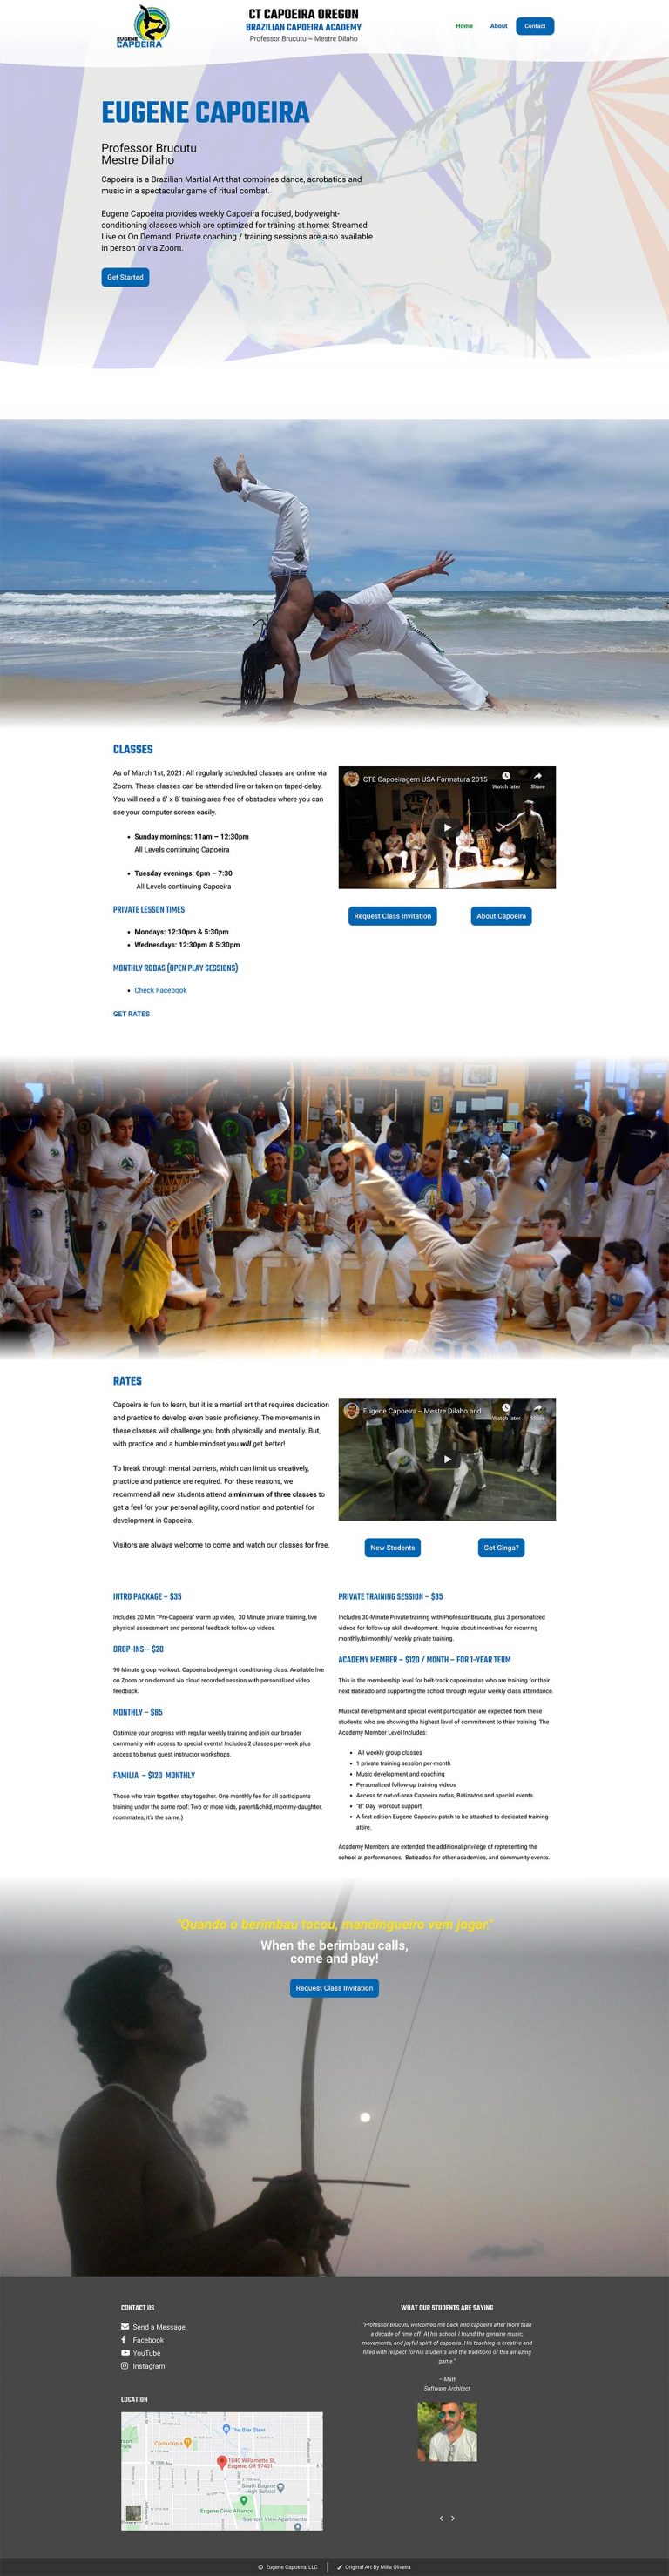 Eugene Capoeira - Home Page